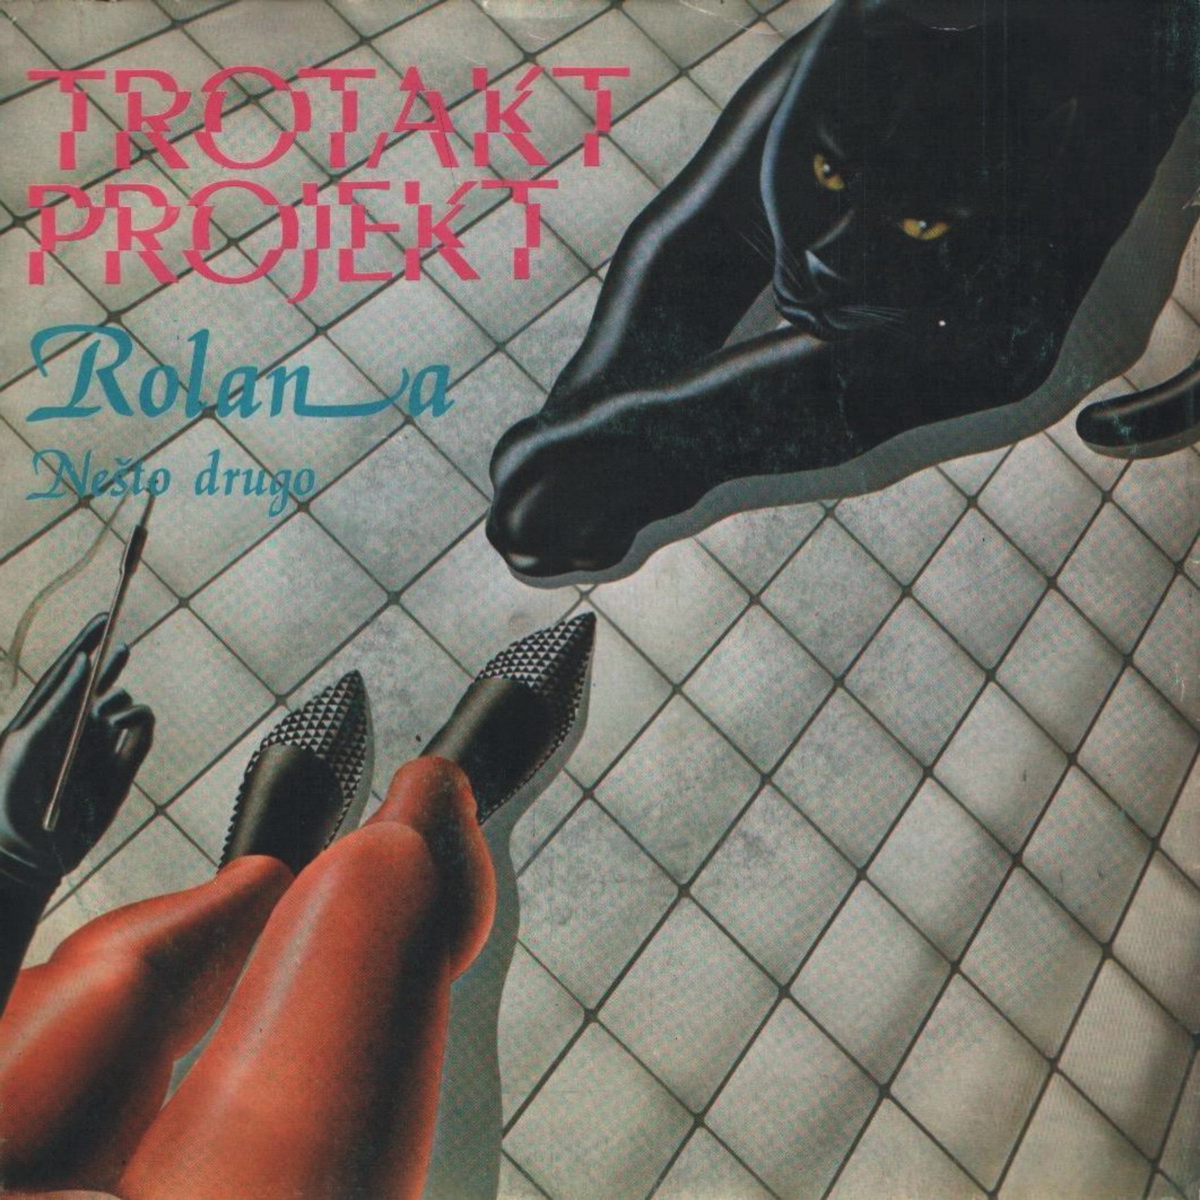 Trotakt Projekt 1984 Rolana A